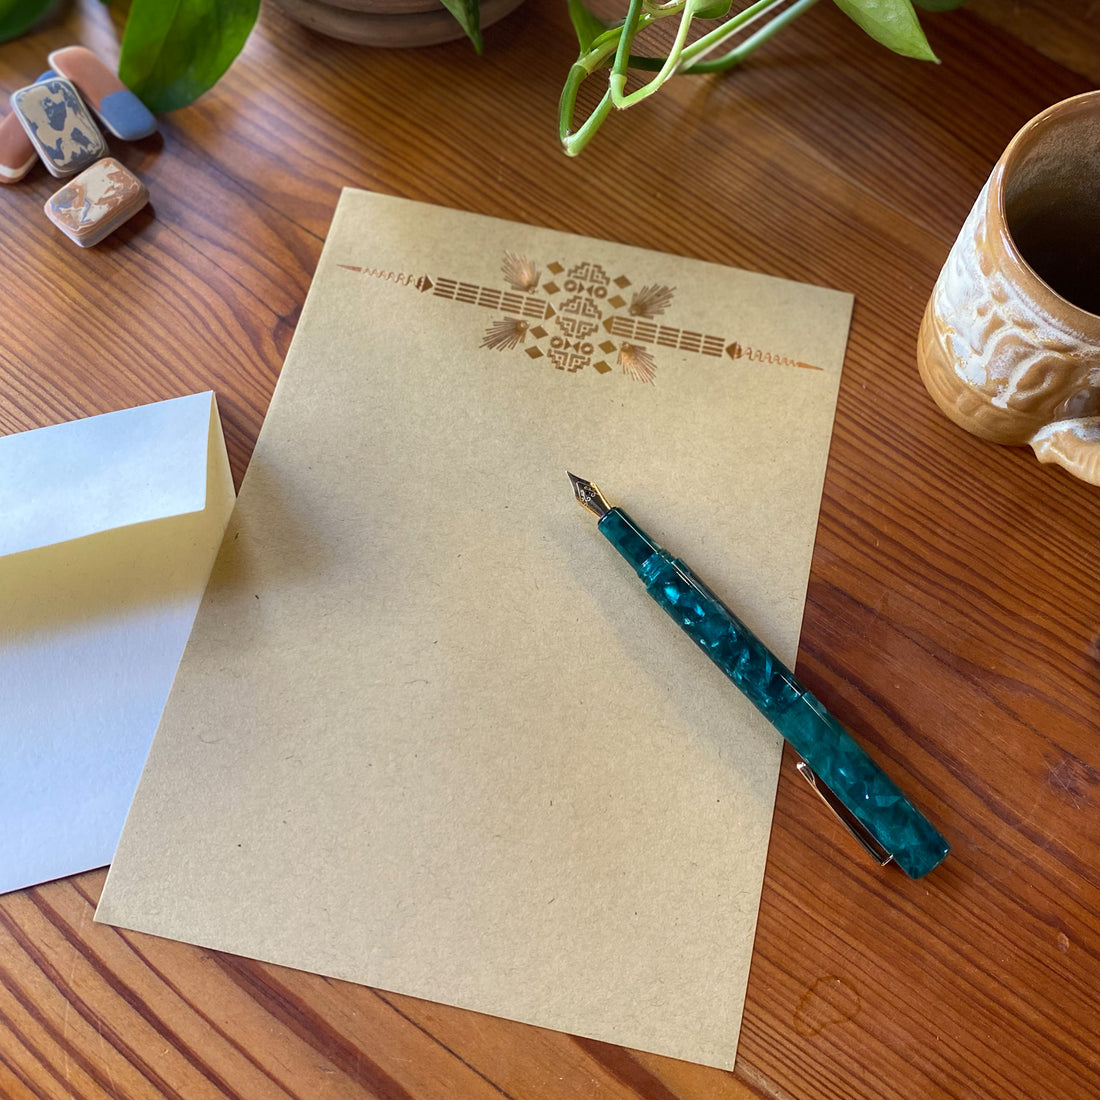 Letter Writing Set 